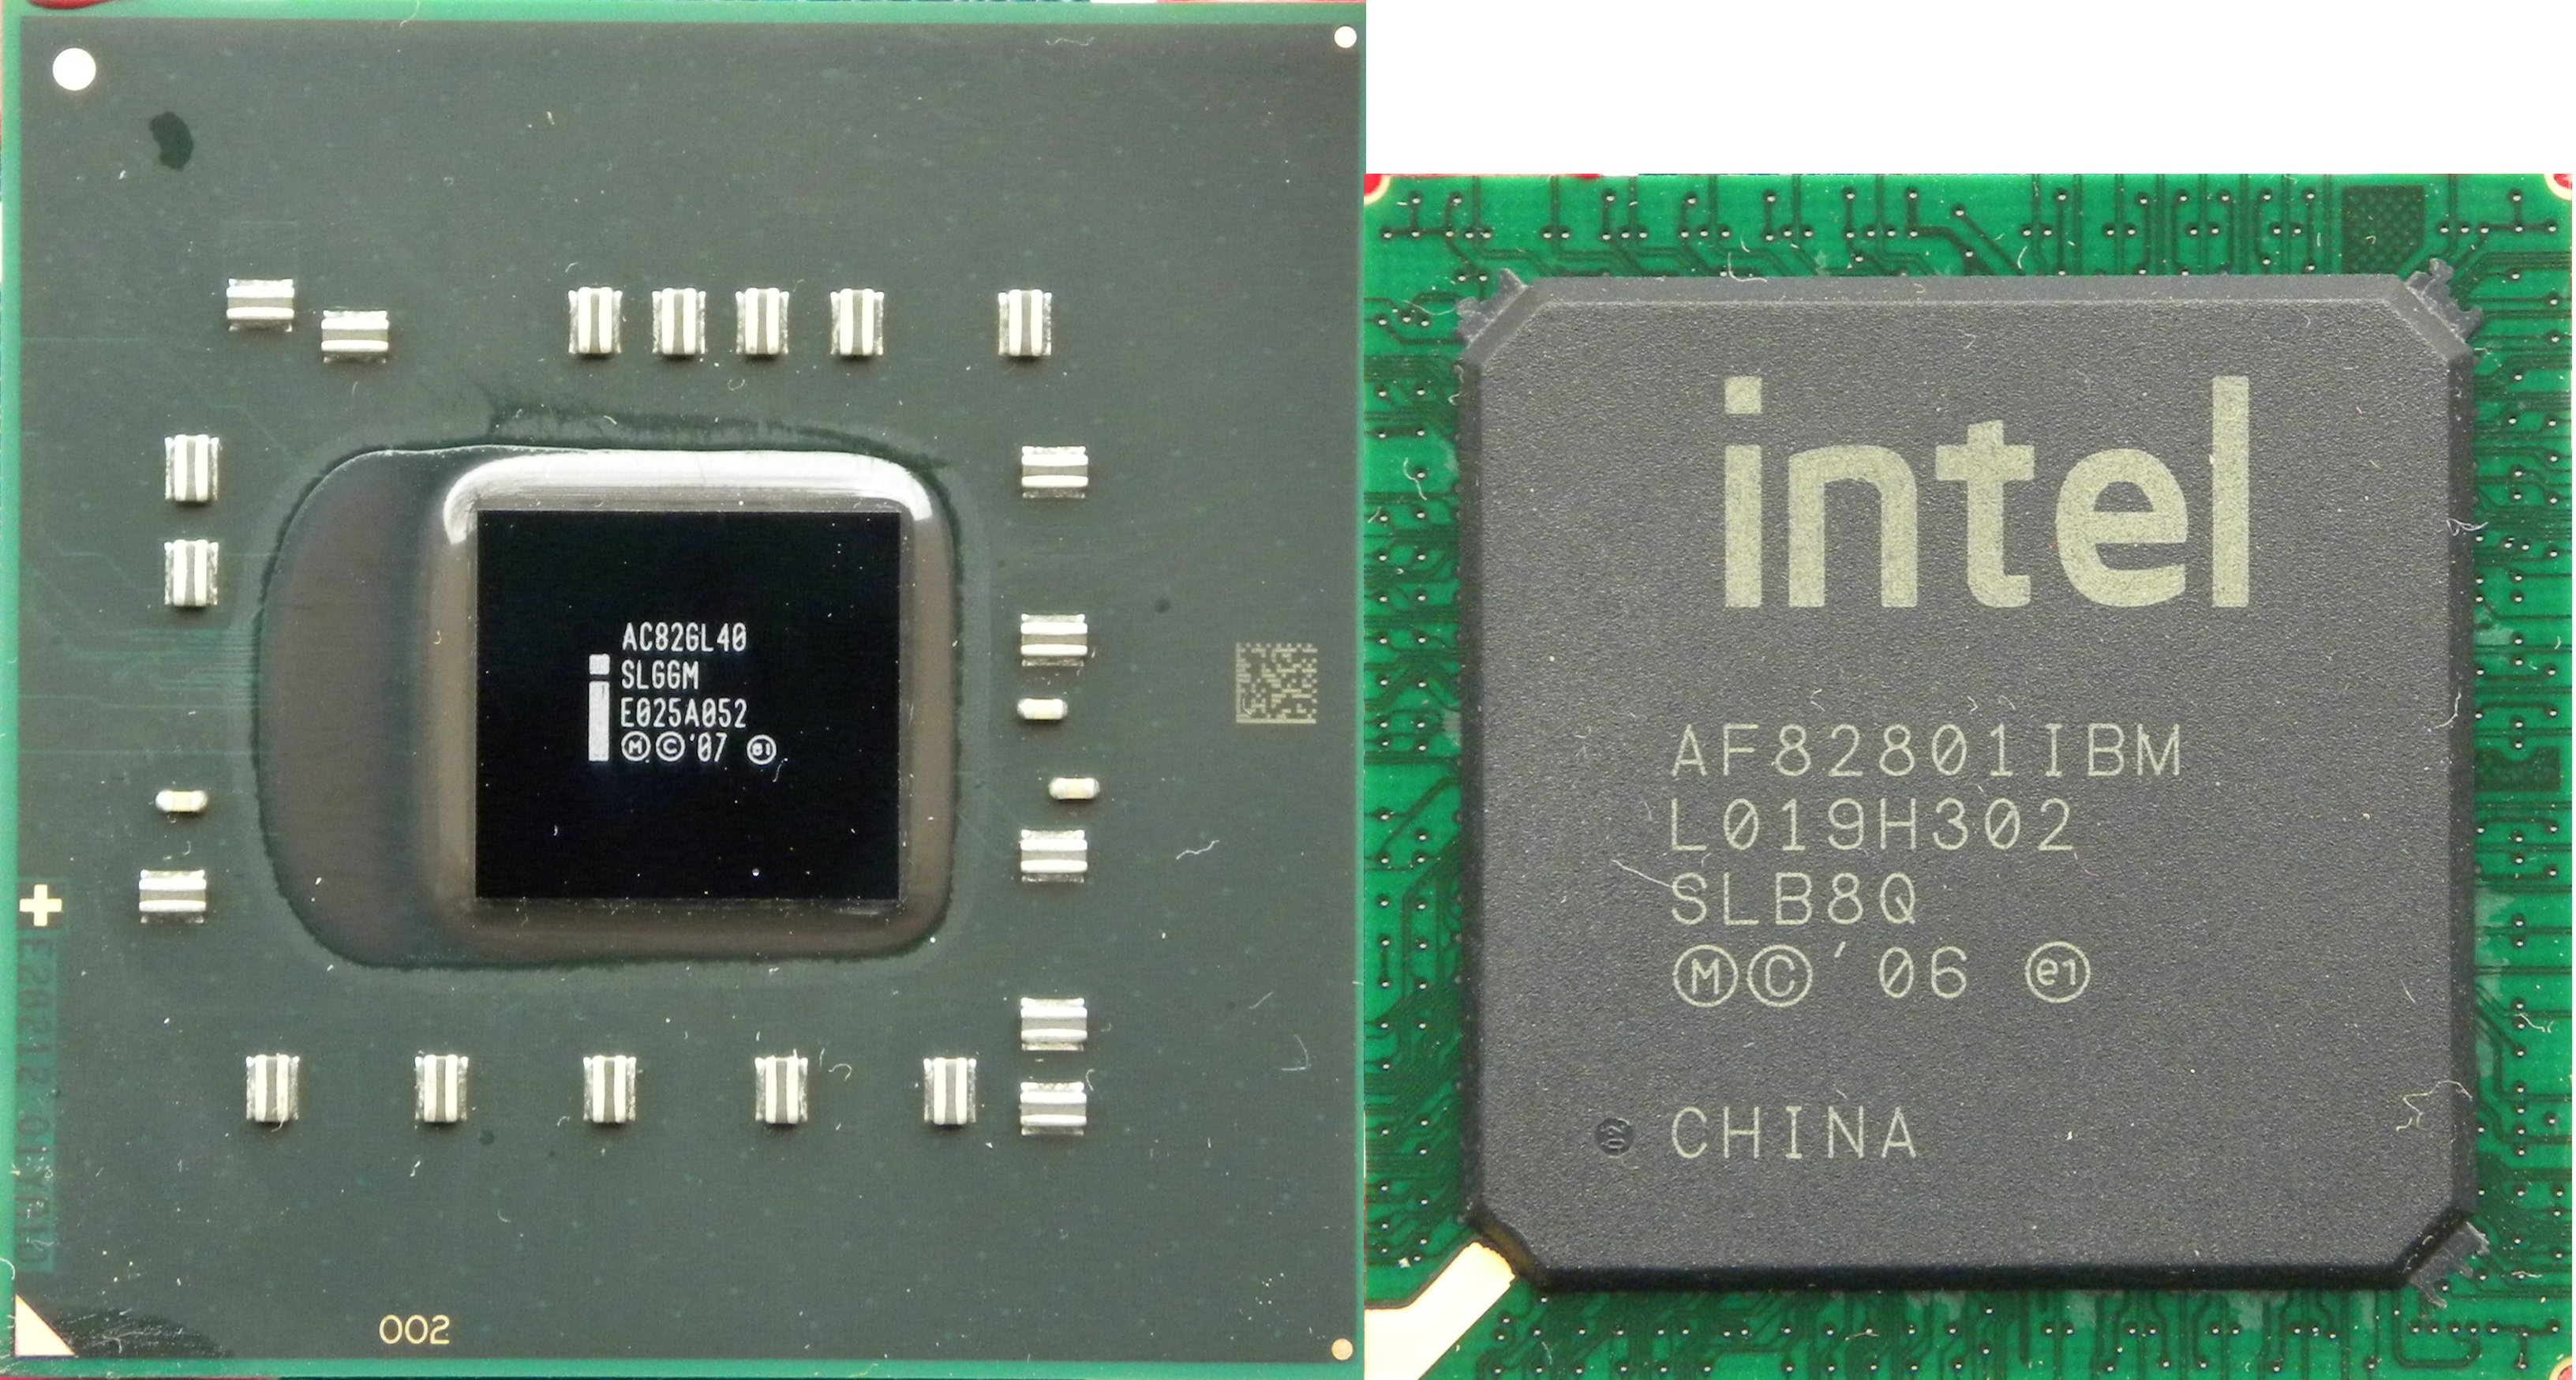 Intel gma 4500mhd. Intel(r) GMA 4500. Intel GMA 4500mhd видеокарта. Intel GMA x4500 видеокарта. Intel x4500hd.